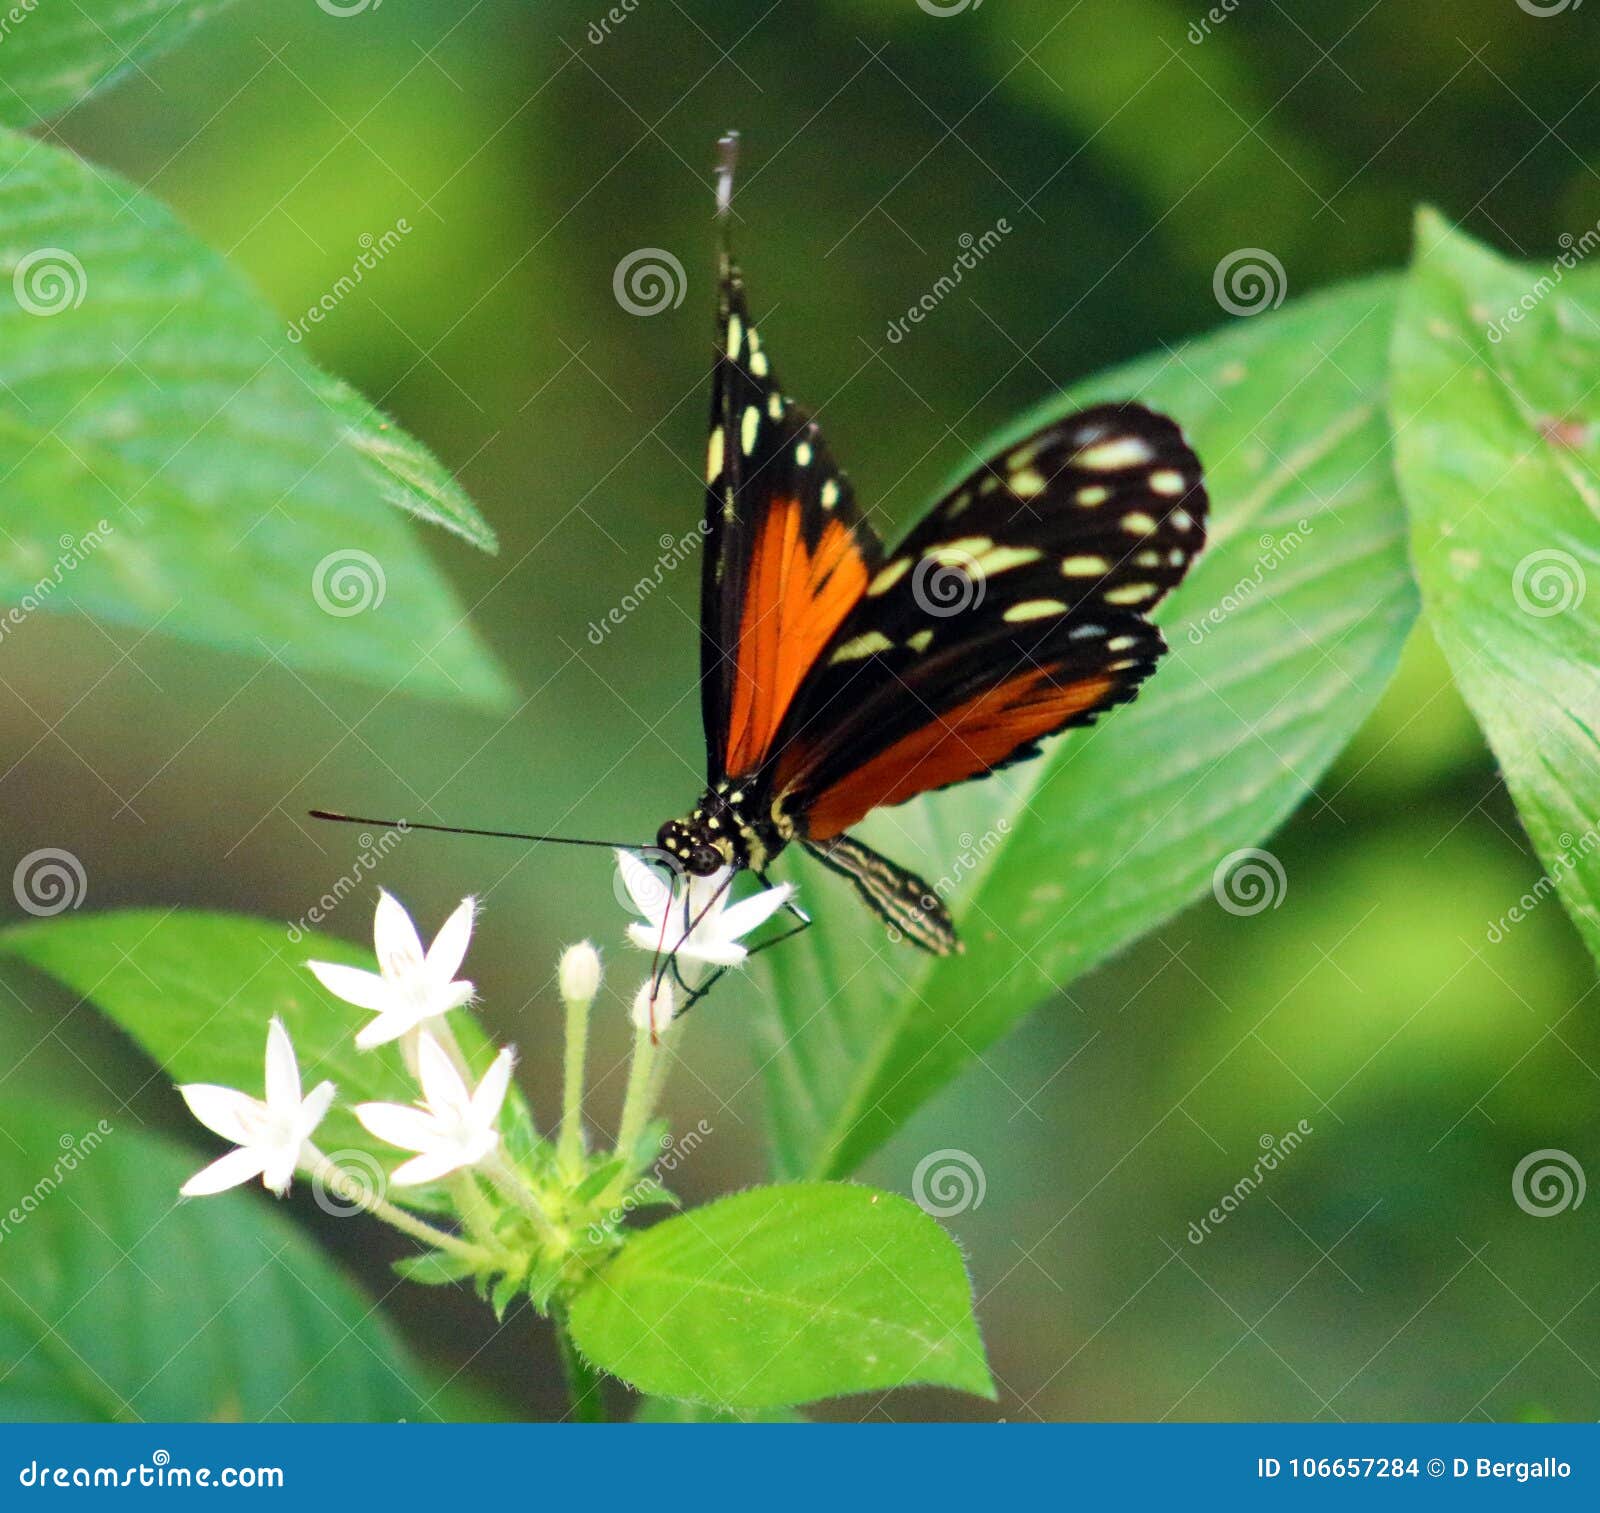 butterfly heliconius hacale zuleikas in costa rica mariposa naranja